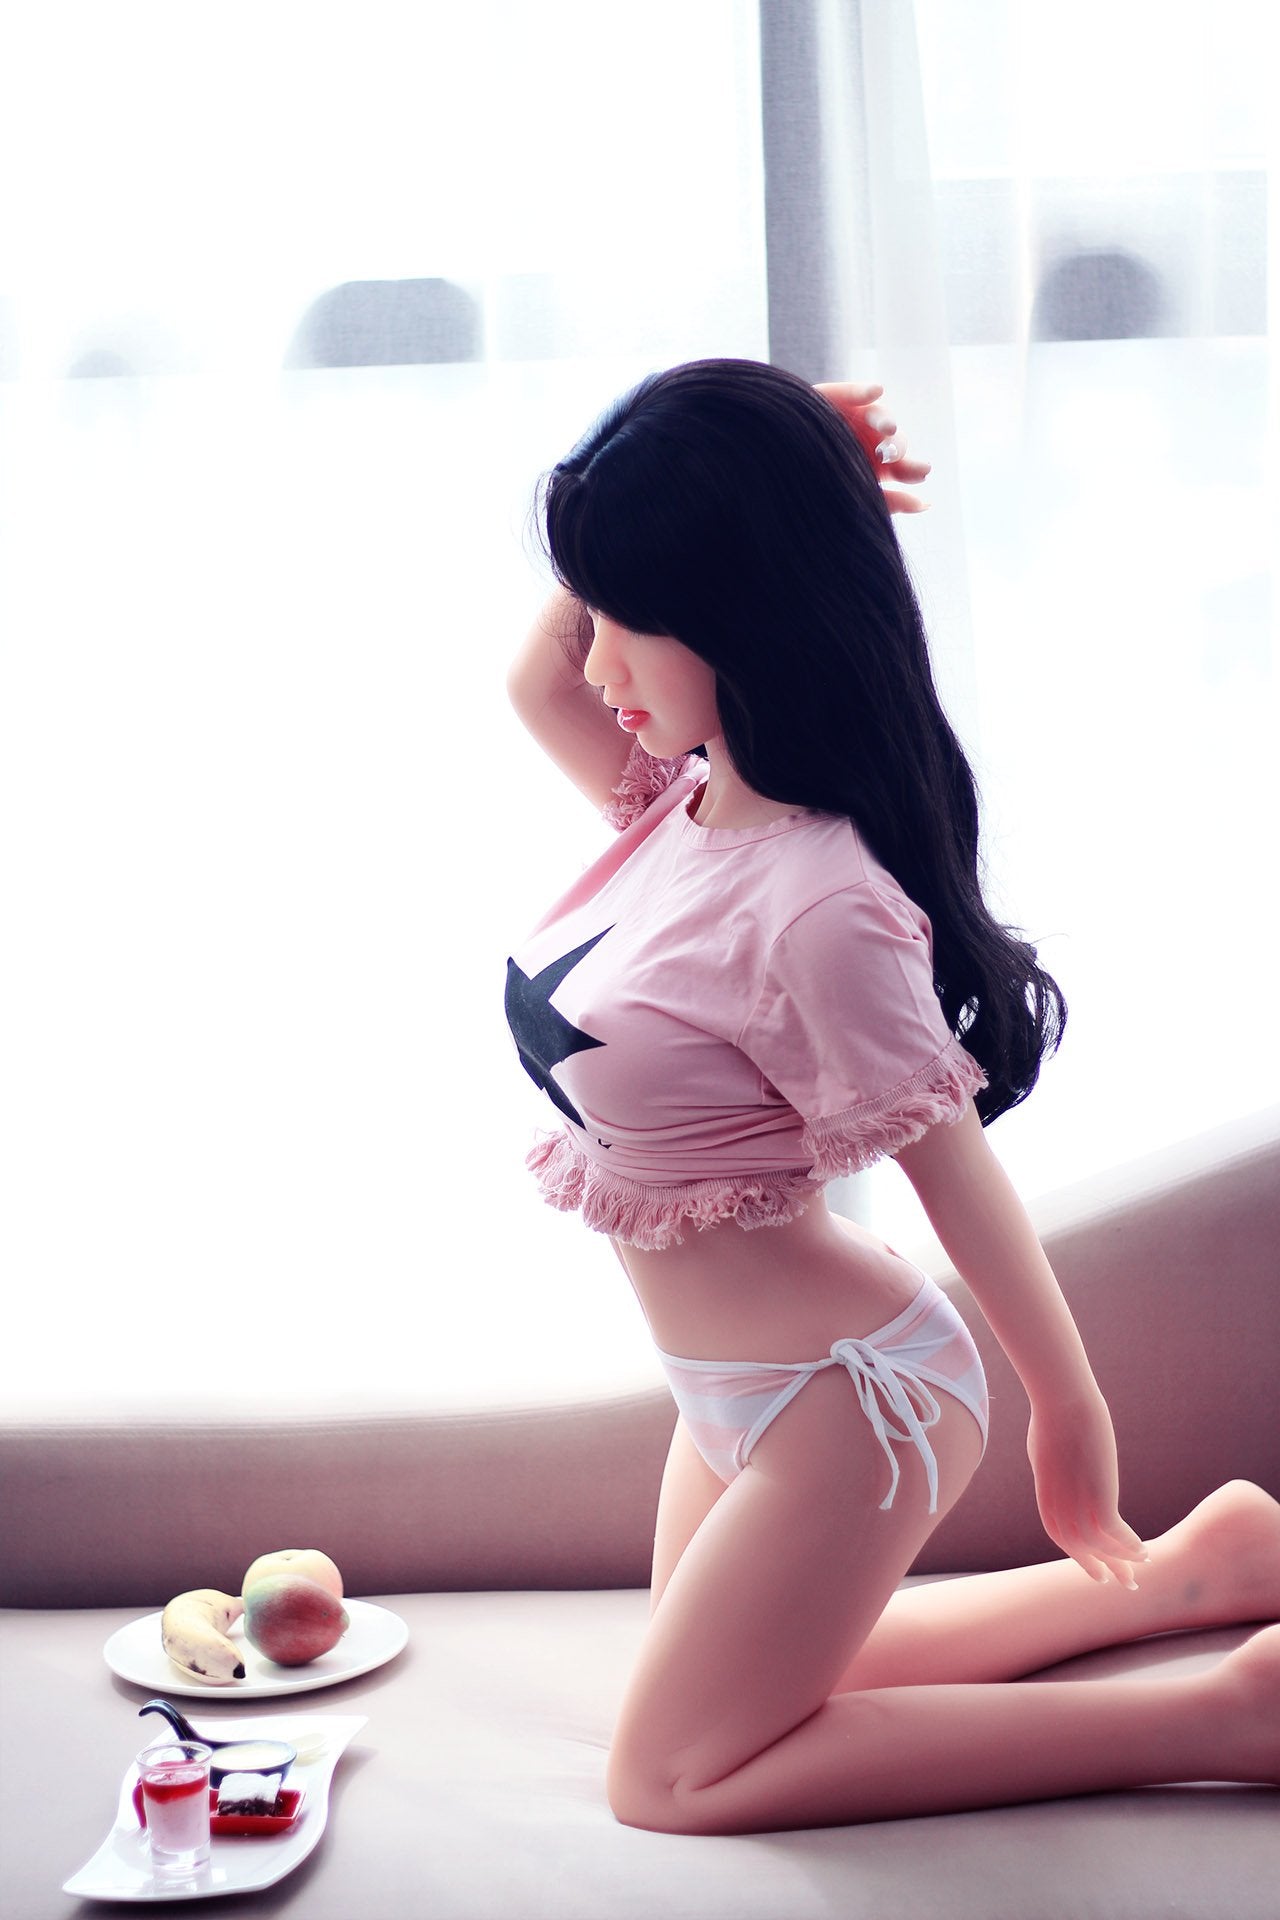 jonell 140cm black hair japanese jy medium tits skinny tpe asian small sex doll(2)